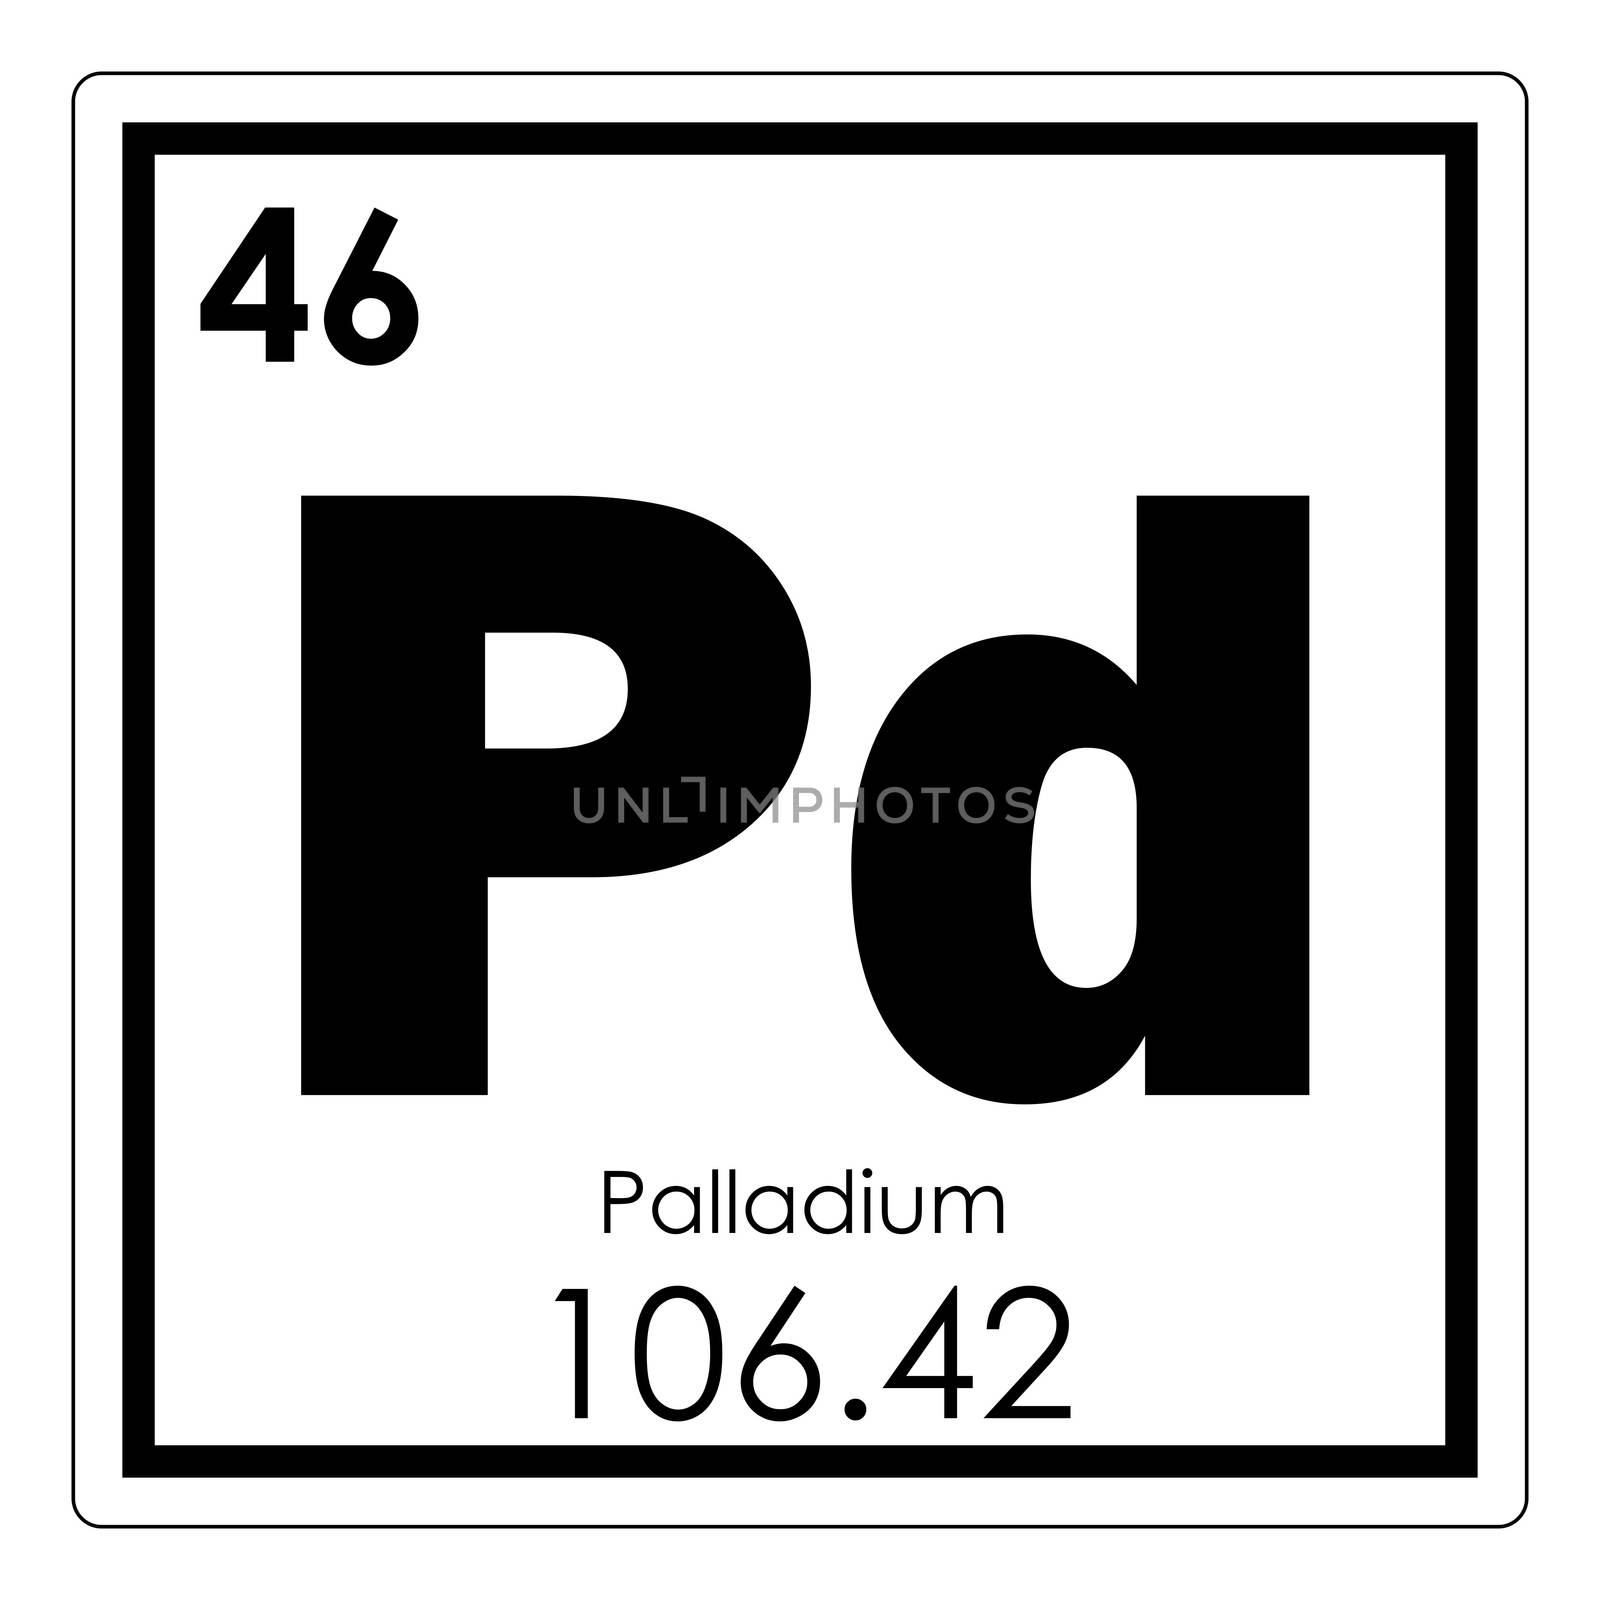 Palladium chemical element by tony4urban